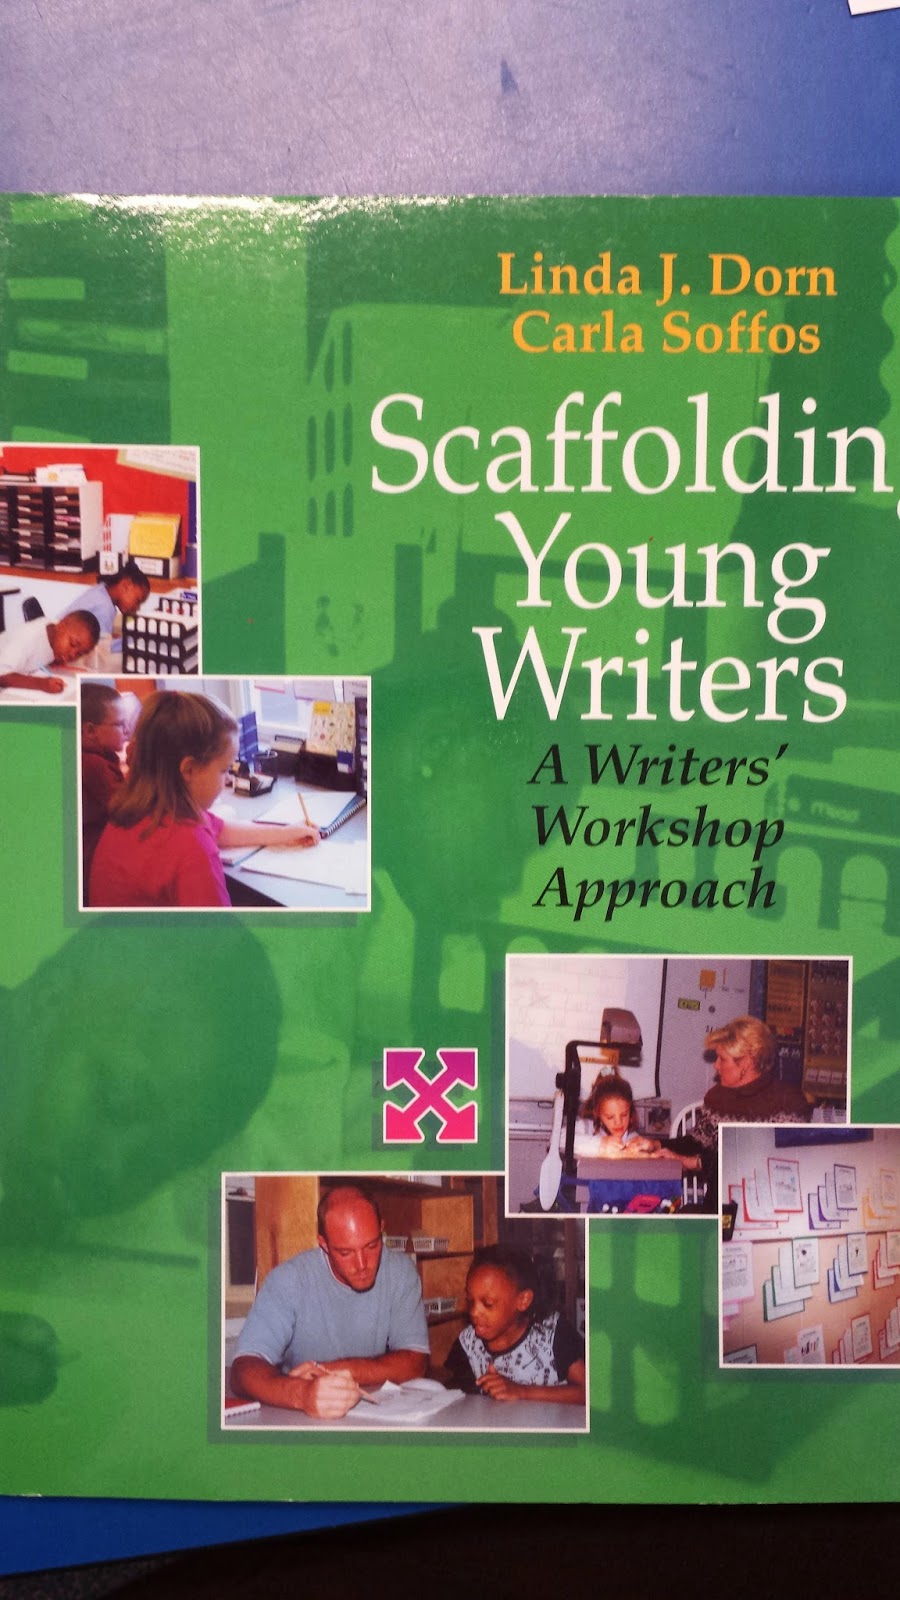 http://www.amazon.com/Scaffolding-Young-Writers-Workshop-Approach/dp/1571103422/ref=sr_1_1?ie=UTF8&qid=1401831996&sr=8-1&keywords=scaffolding+young+writers